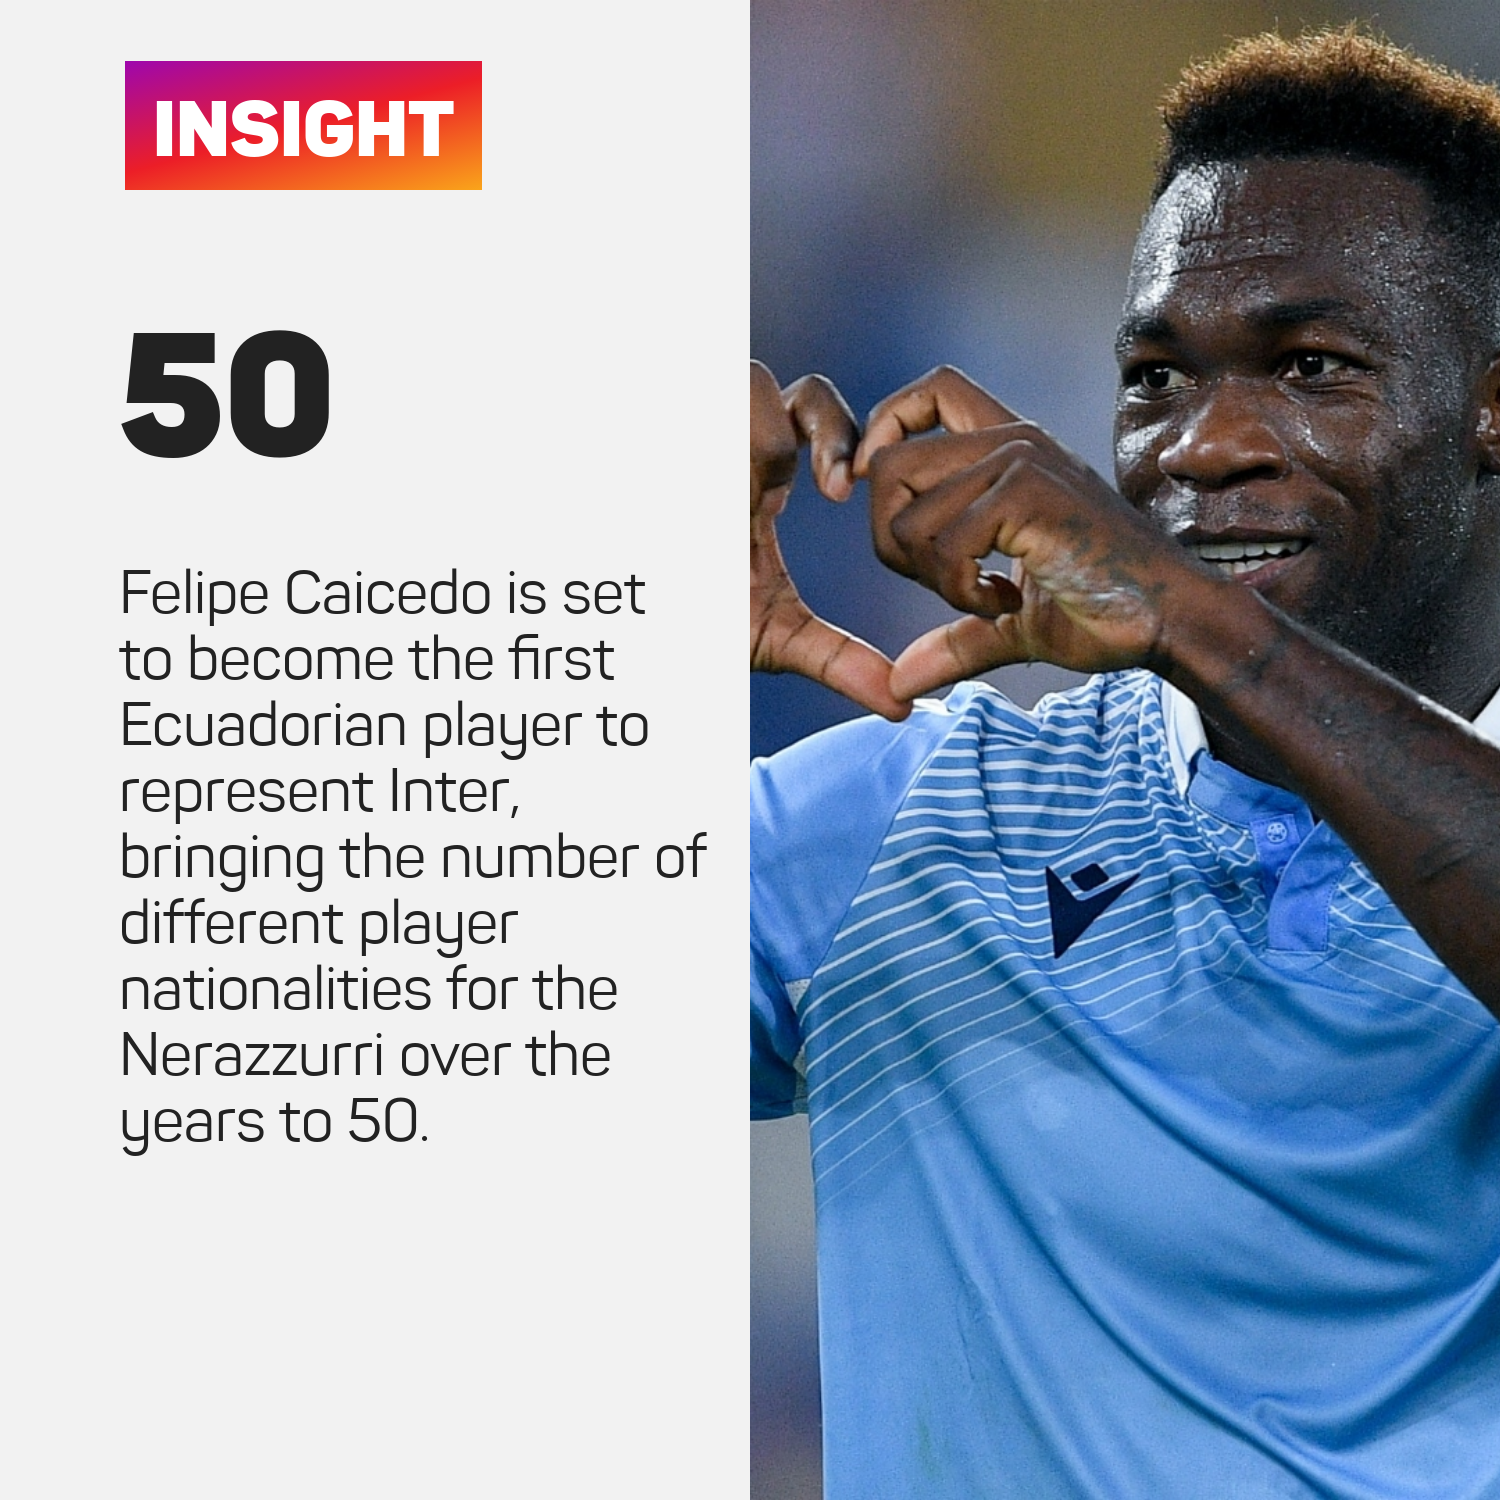 Felipe Caicedo is set to become the first Ecuadorian player to represent Inter